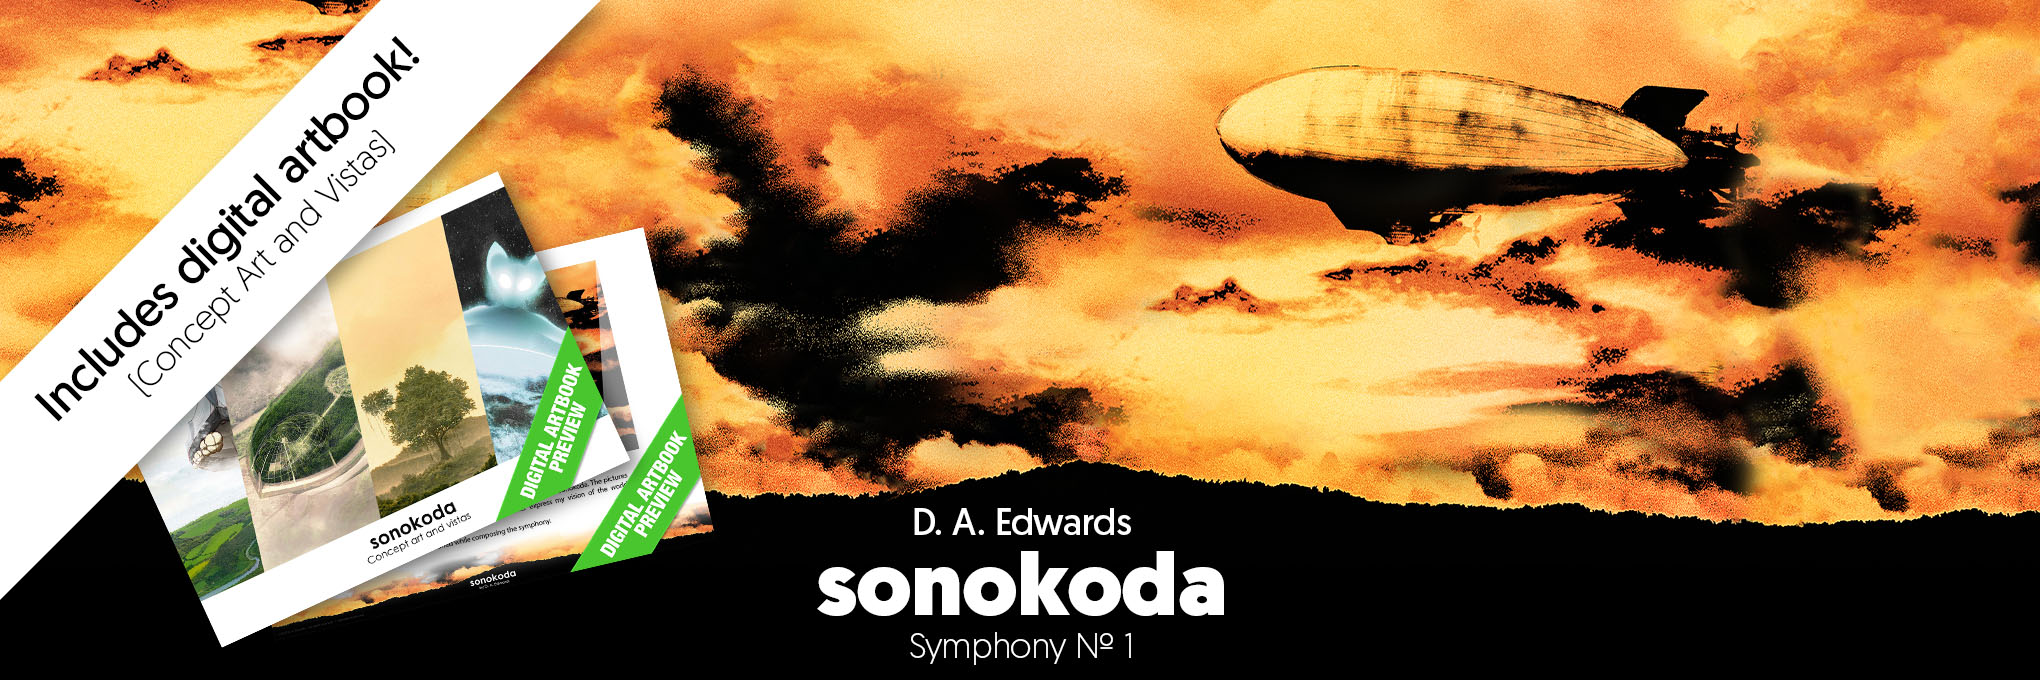 Sonokoda – Symphony No. 1